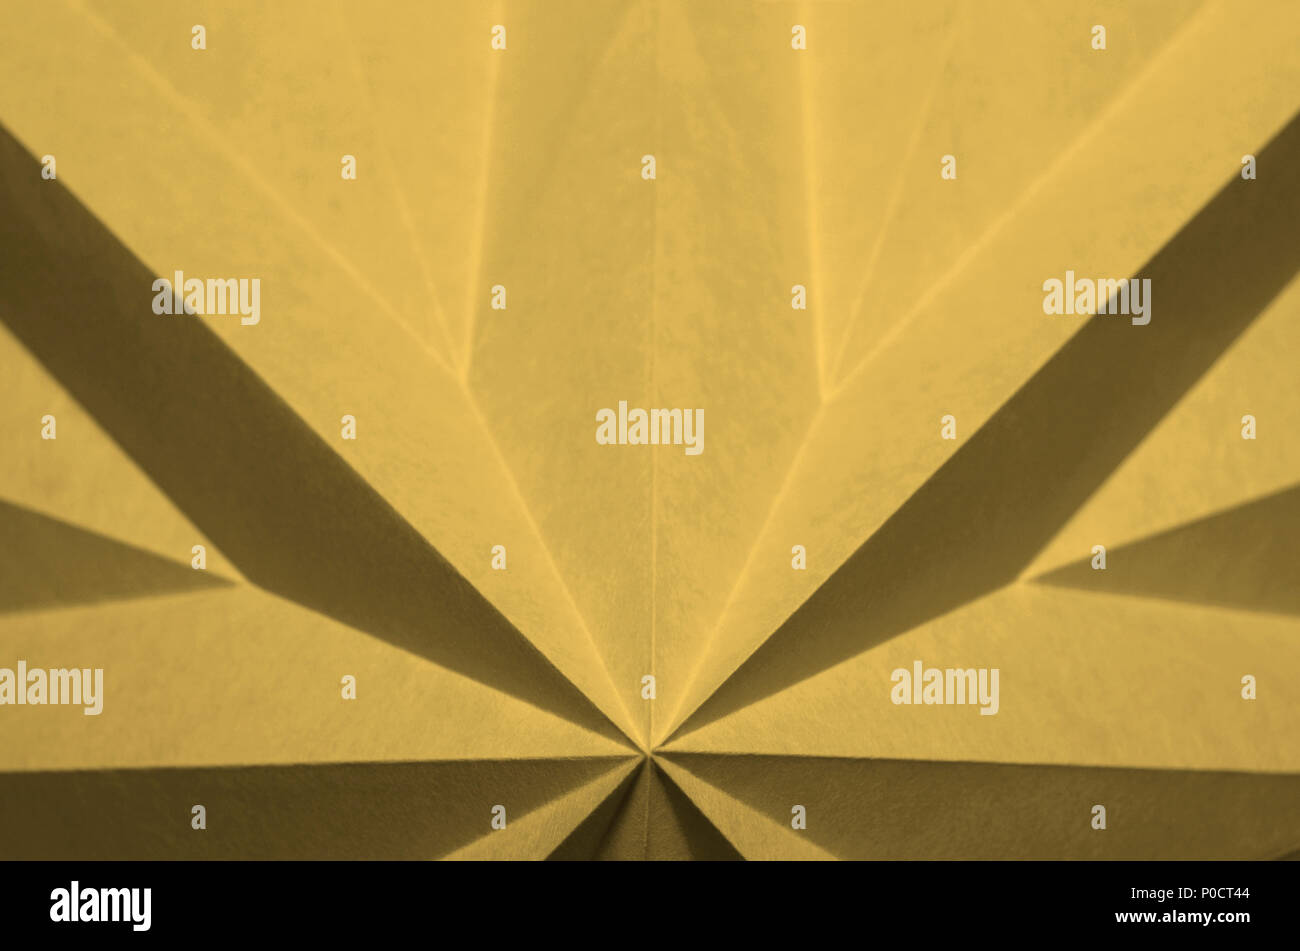 yellow abstract wallpaper background Origami, Bamboo; Pantone 14-0740. Angular monochrome graphic design element. Stock Photo